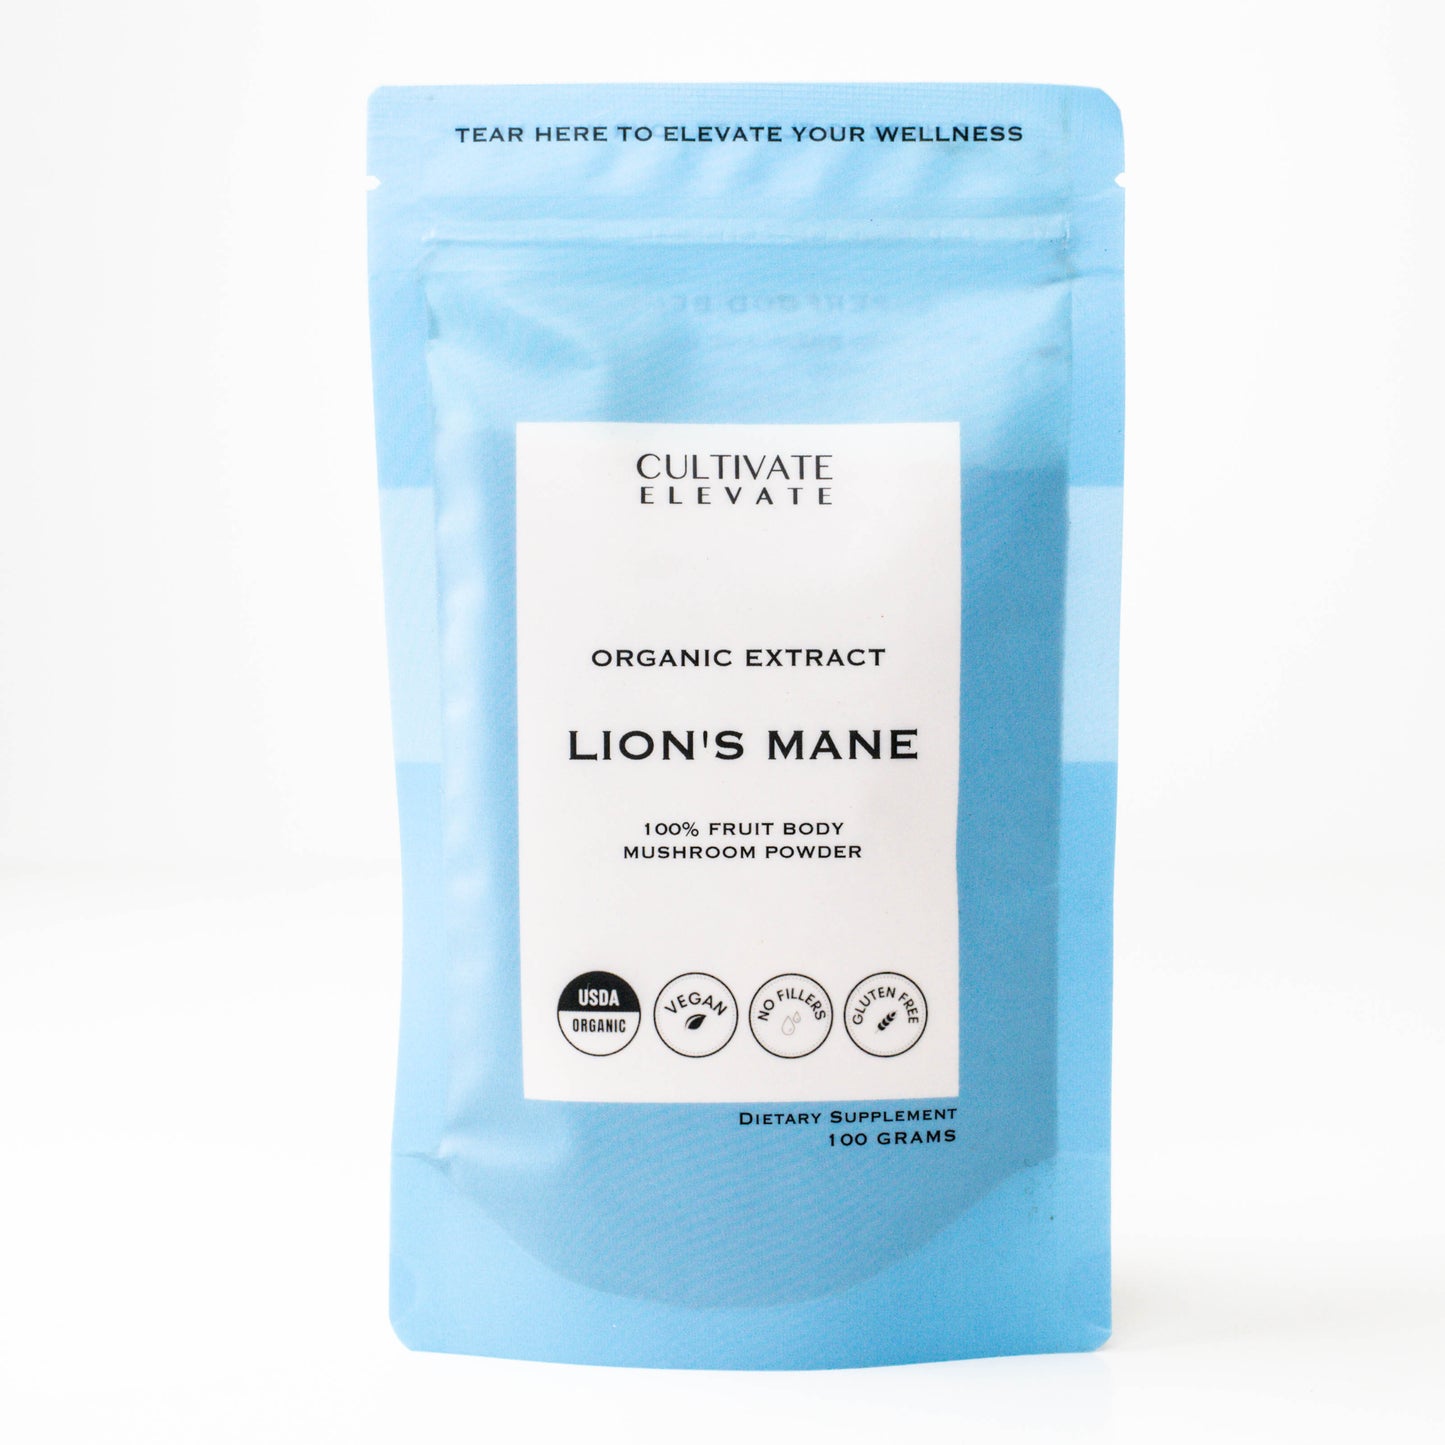 Organic Lions Mane Mushroom Extract Powder - The Brain Mushroom